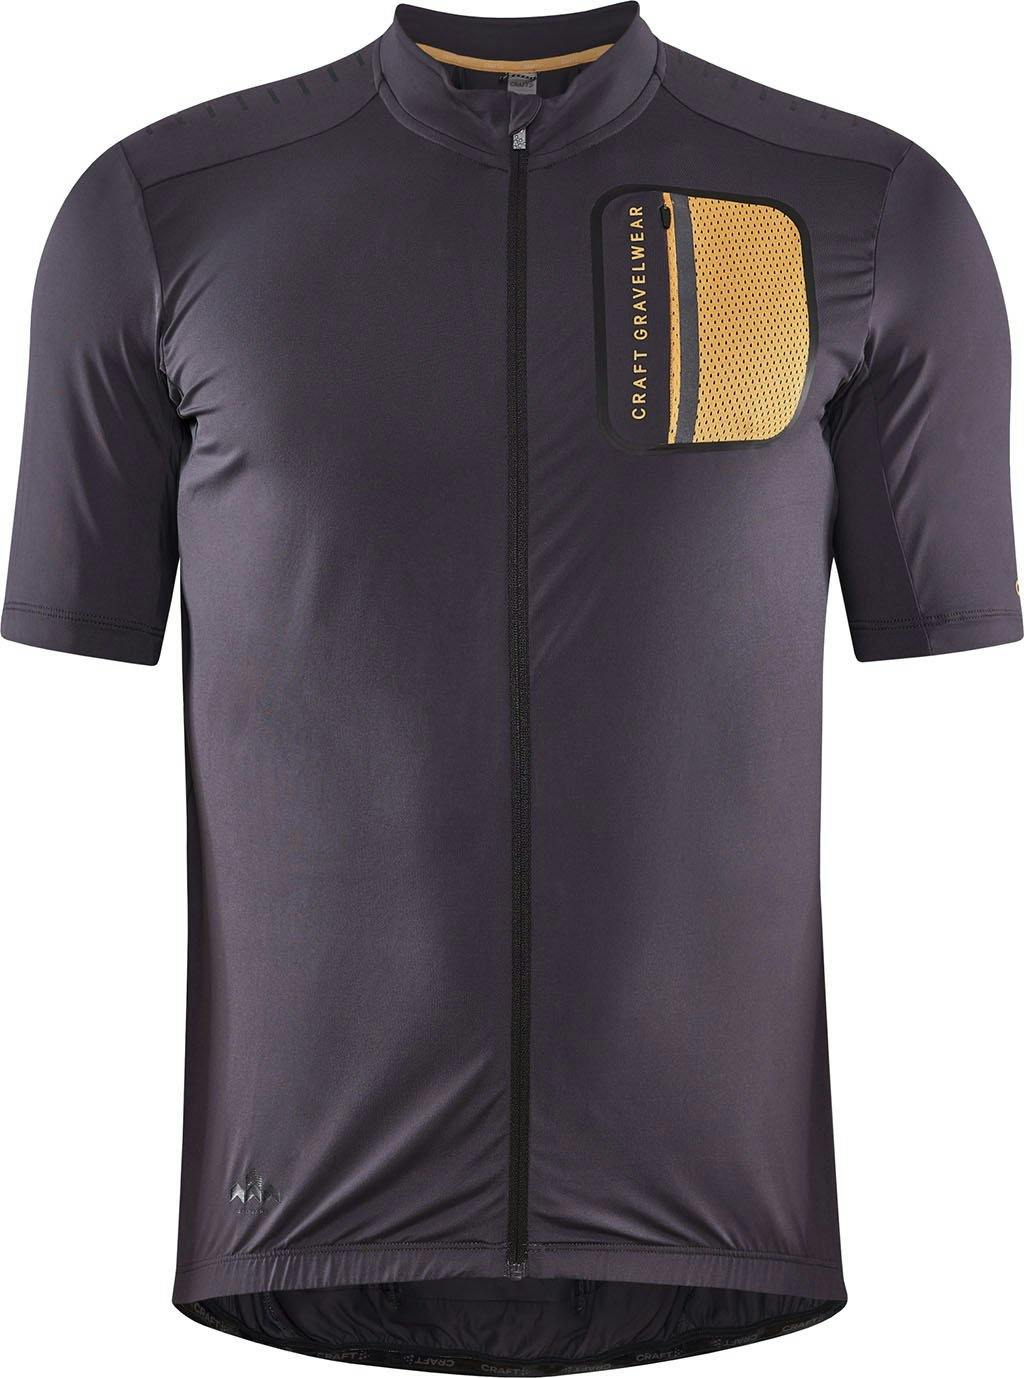 Product image for ADV Gravel Short Sleeve Jersey - Men's